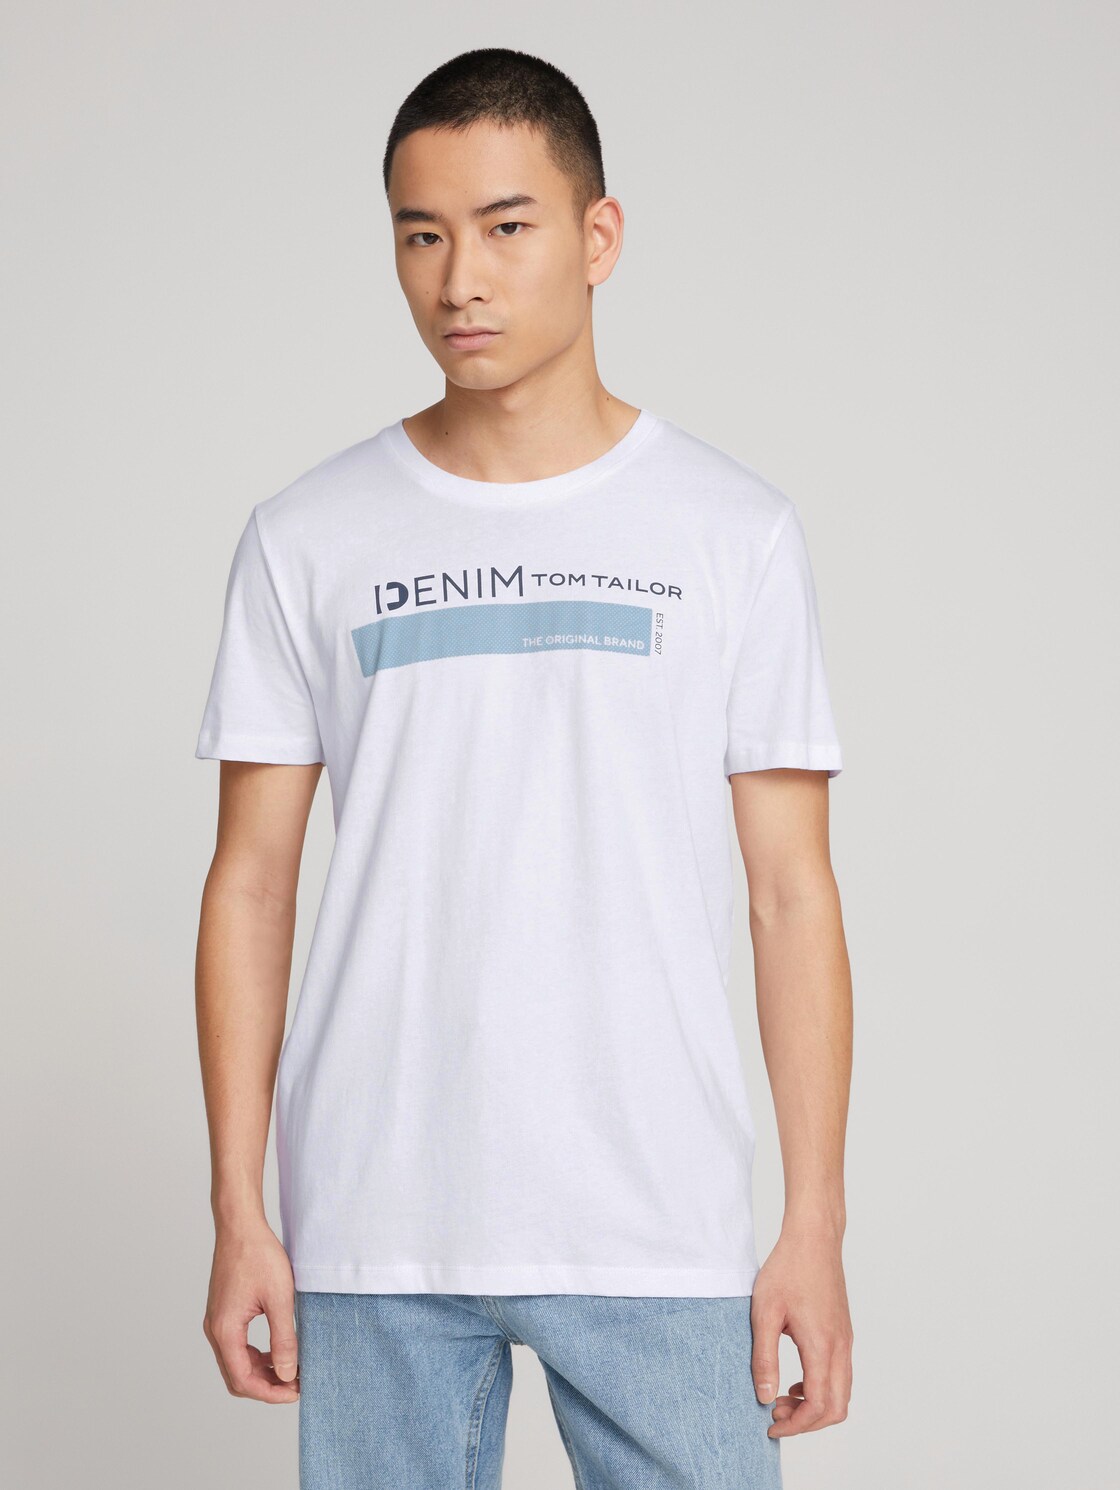 TOM TAILOR DENIM T-shirt van biologisch katoen, White, XL